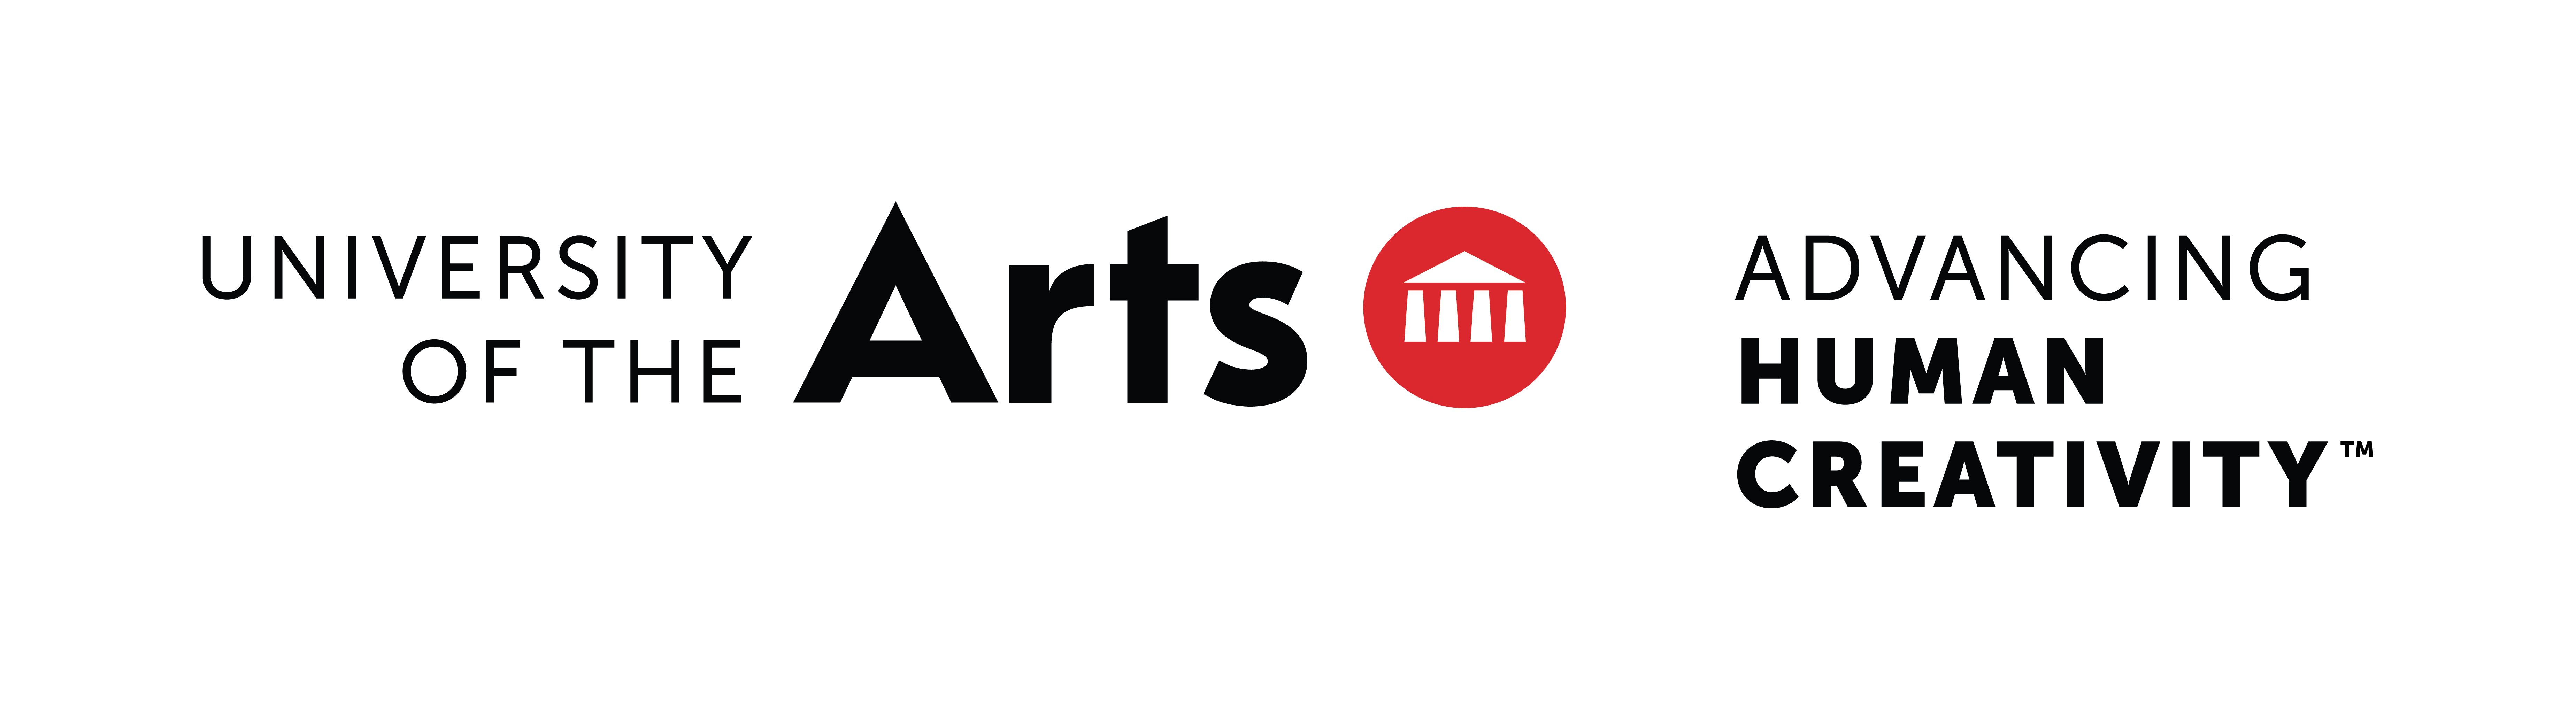 University of the arts logo